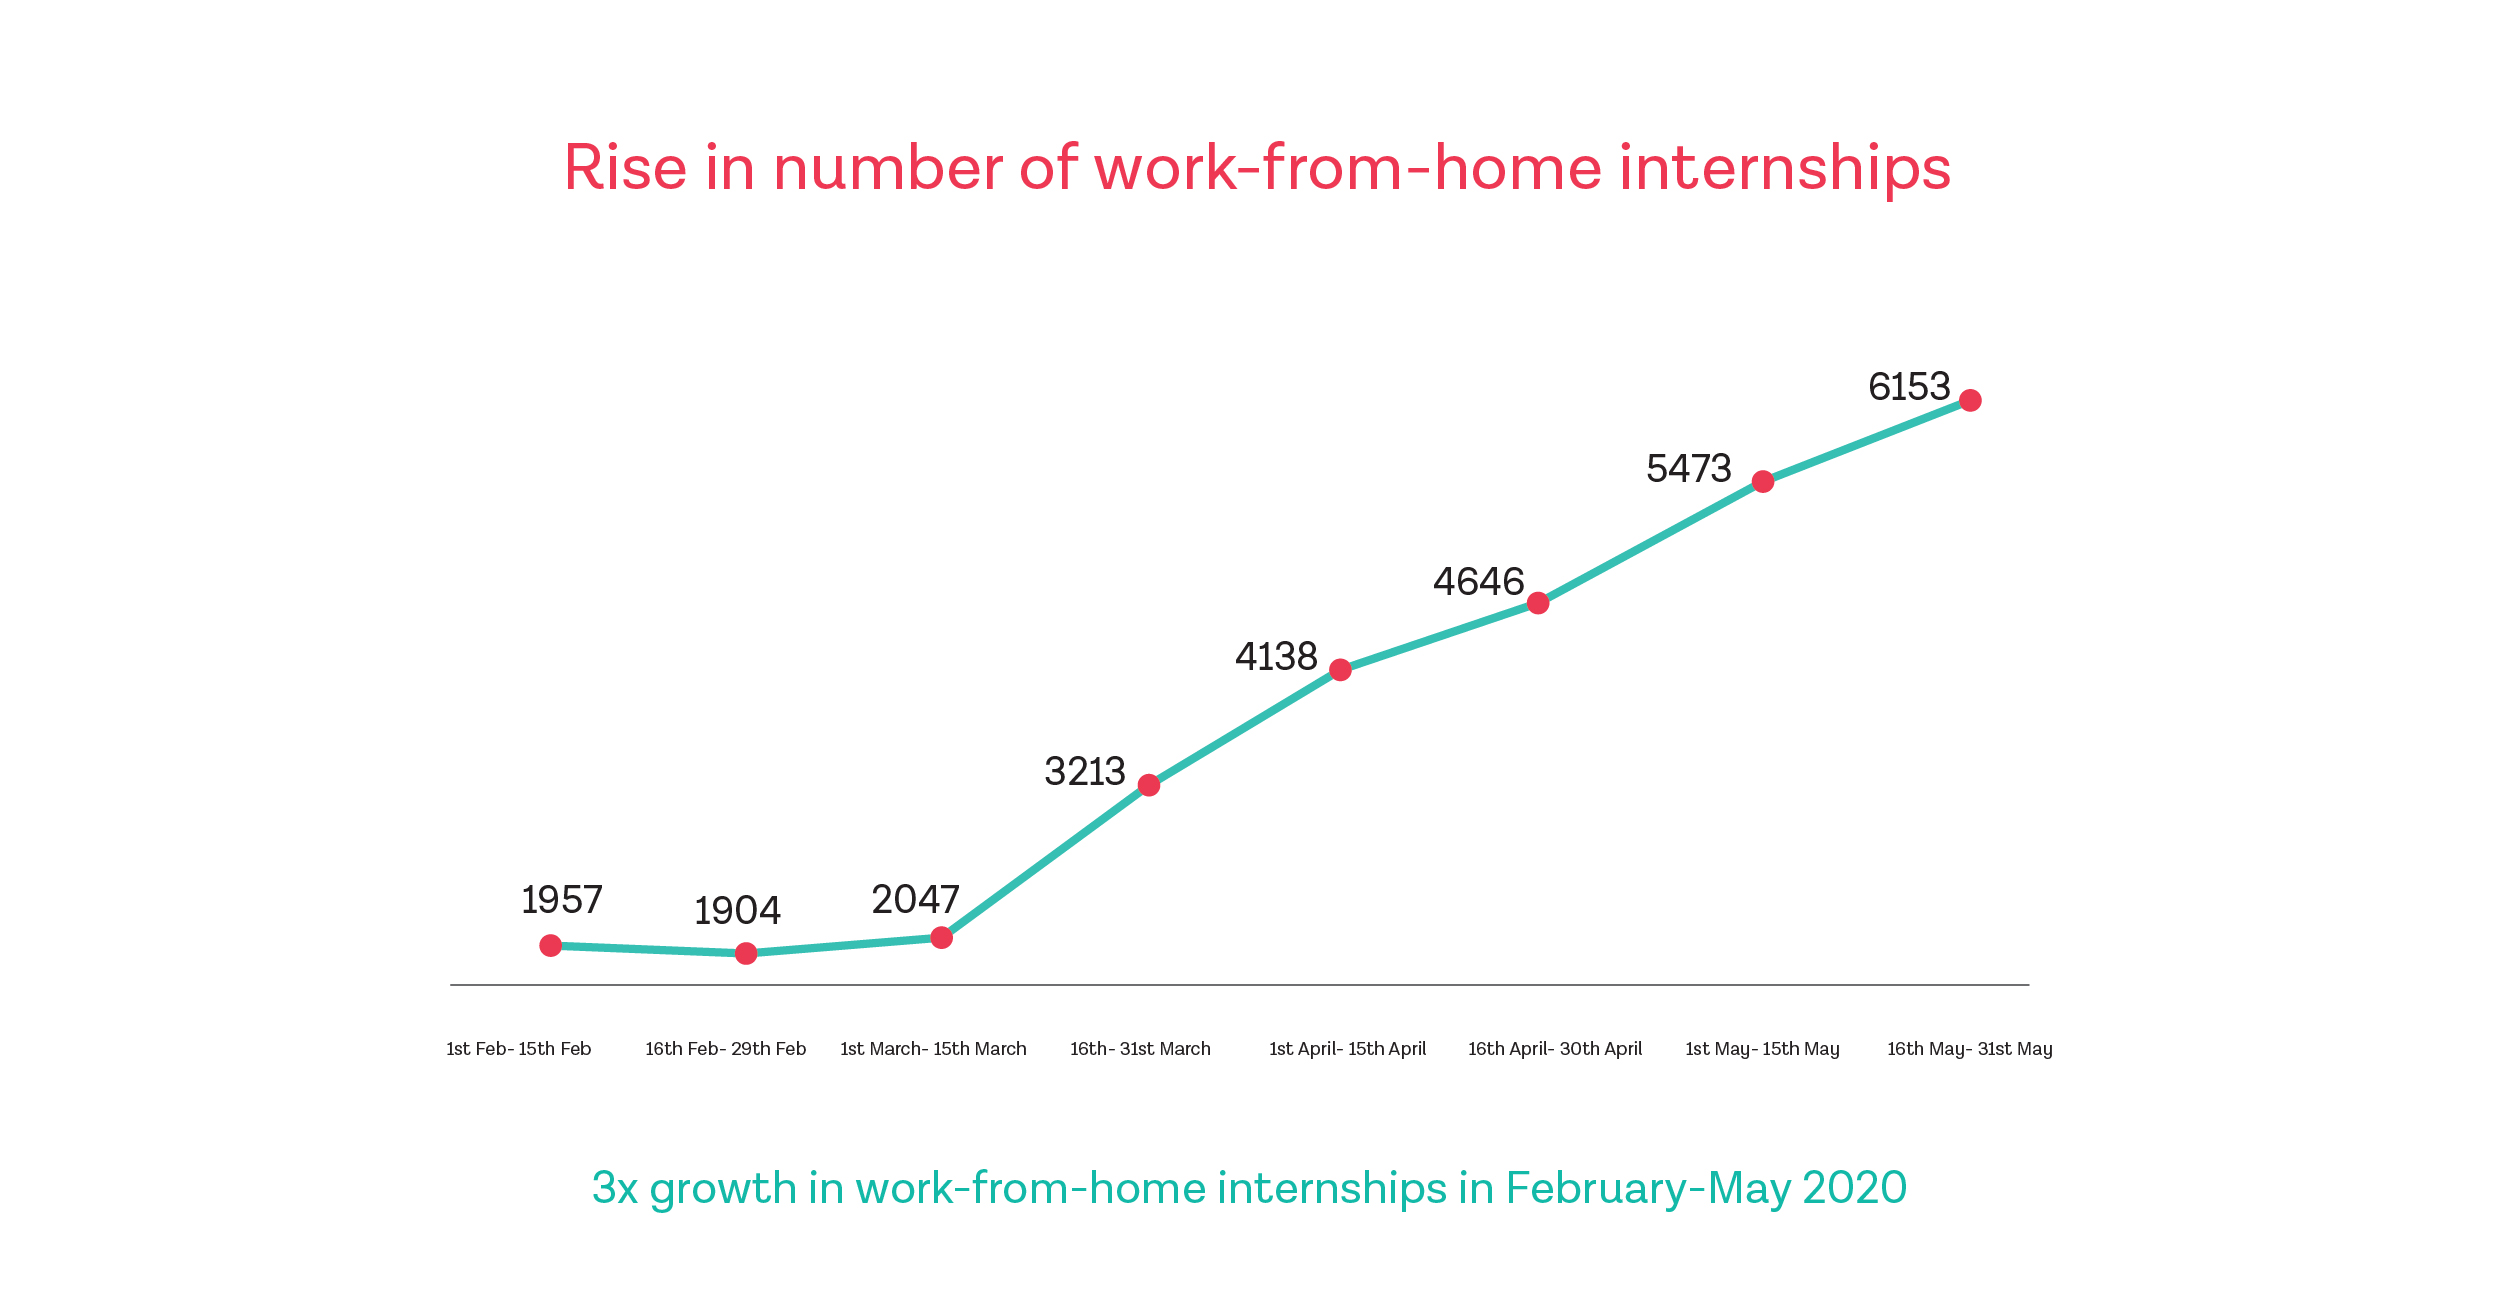 Rise in WFH internships